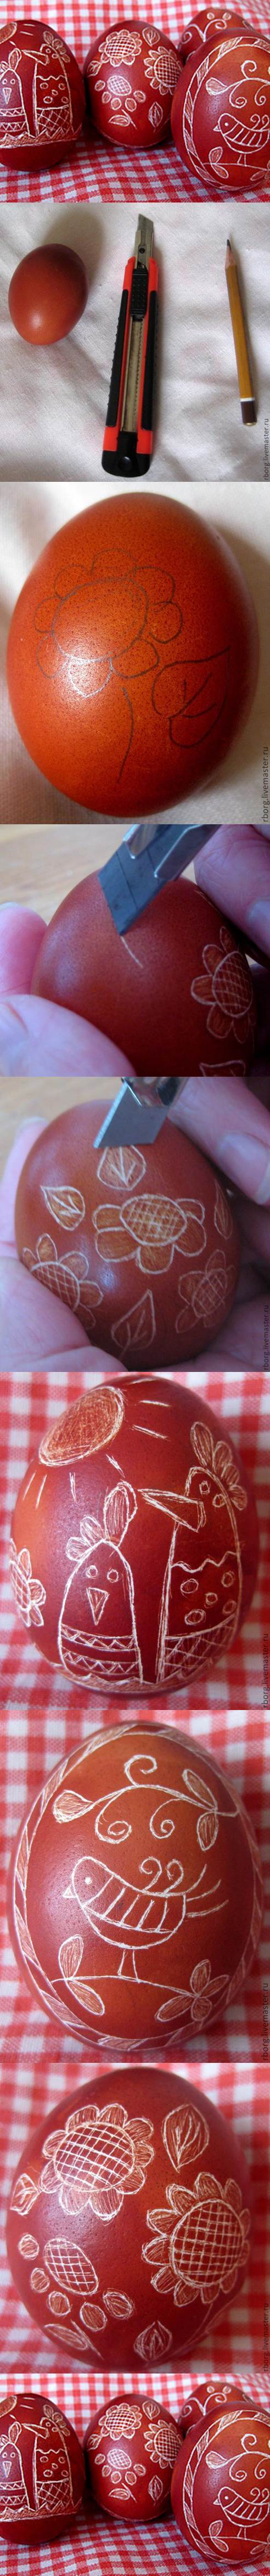 DIY Uniquely Decorated Easter Eggs 2